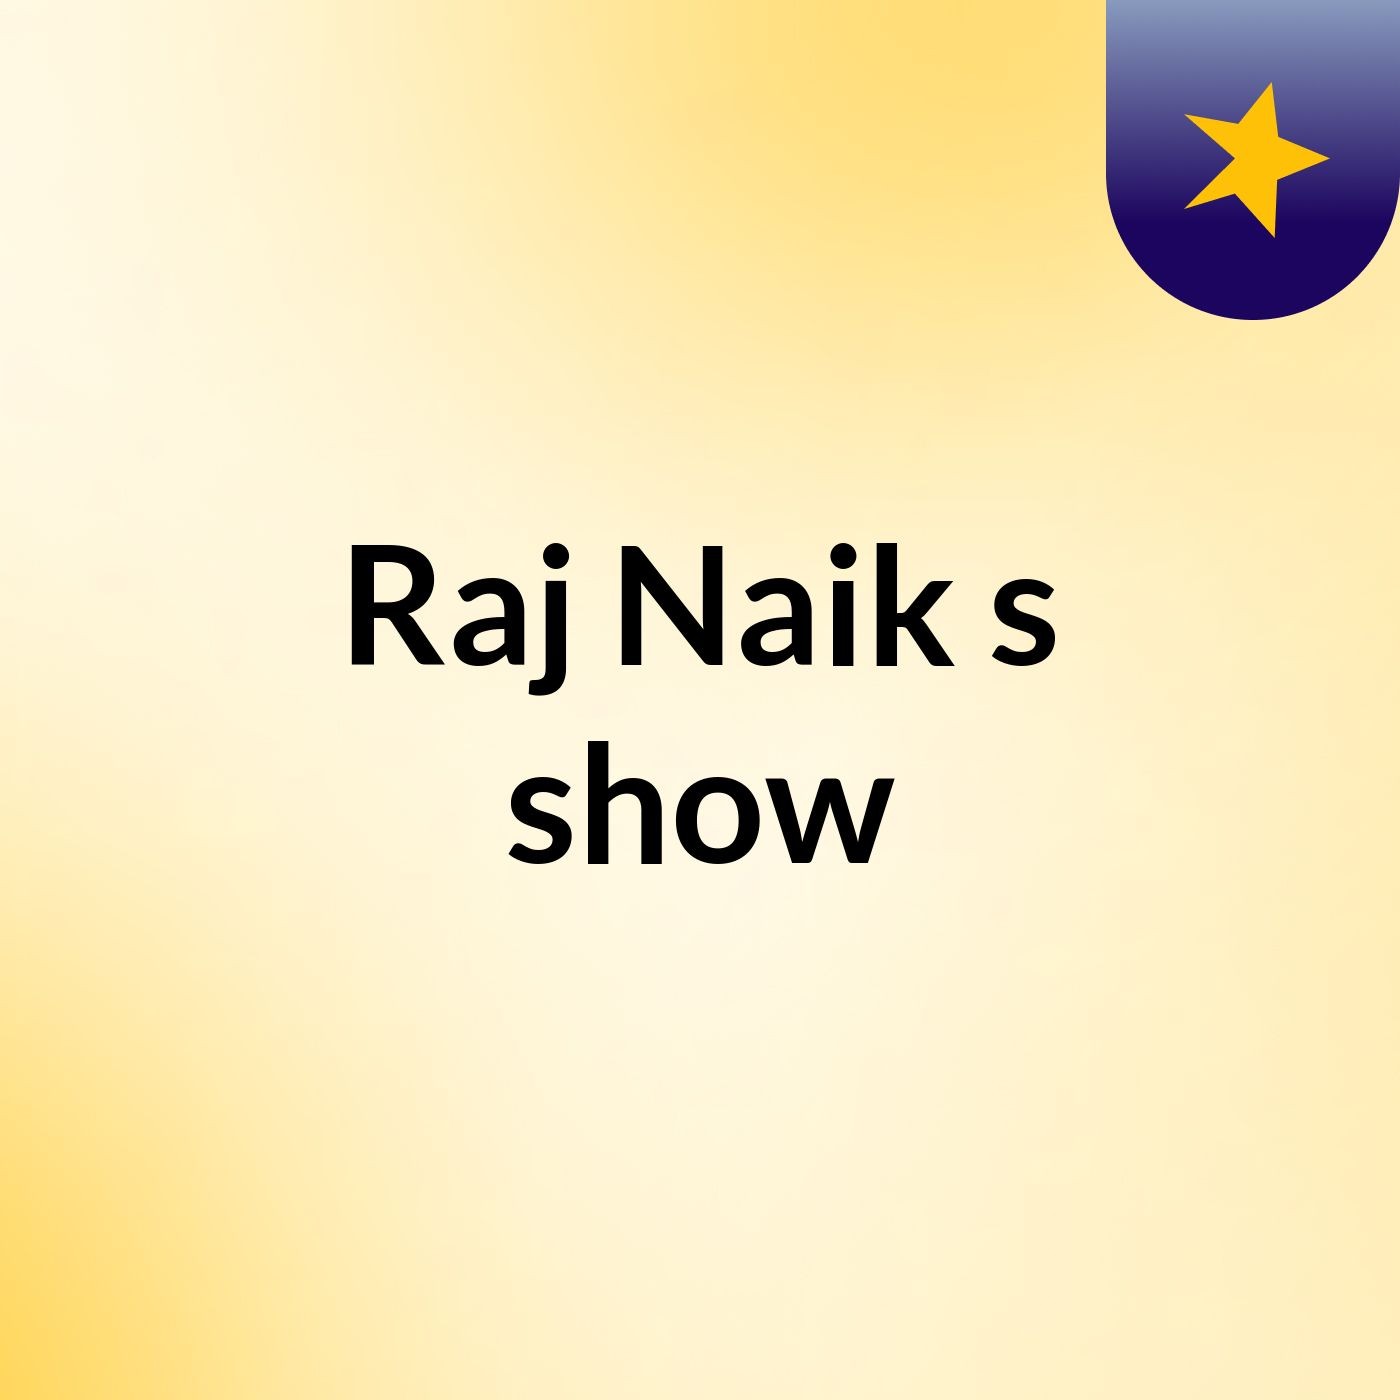 Raj Naik's show